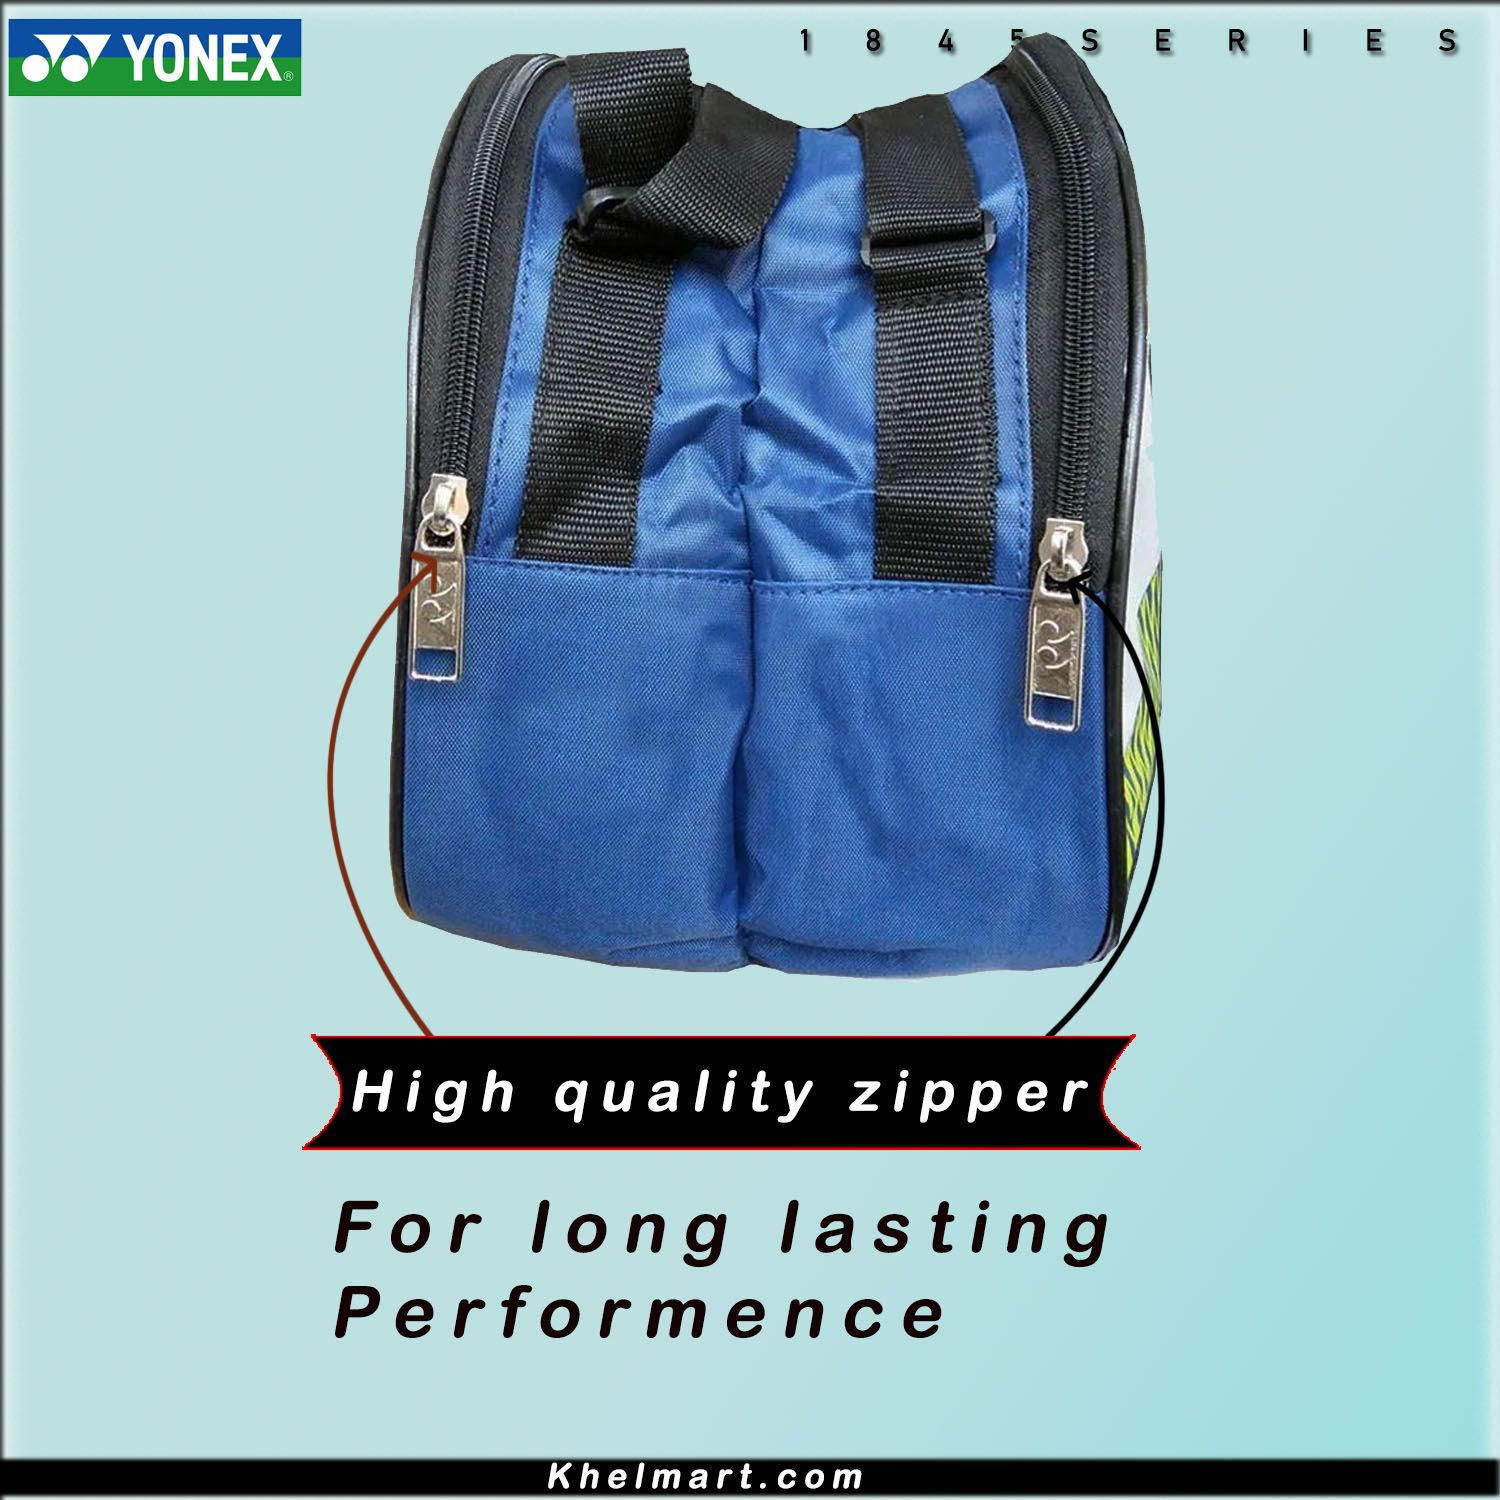 YONEX SUNR 1845 Thermal Badminton Kit Bag Navy and Lime